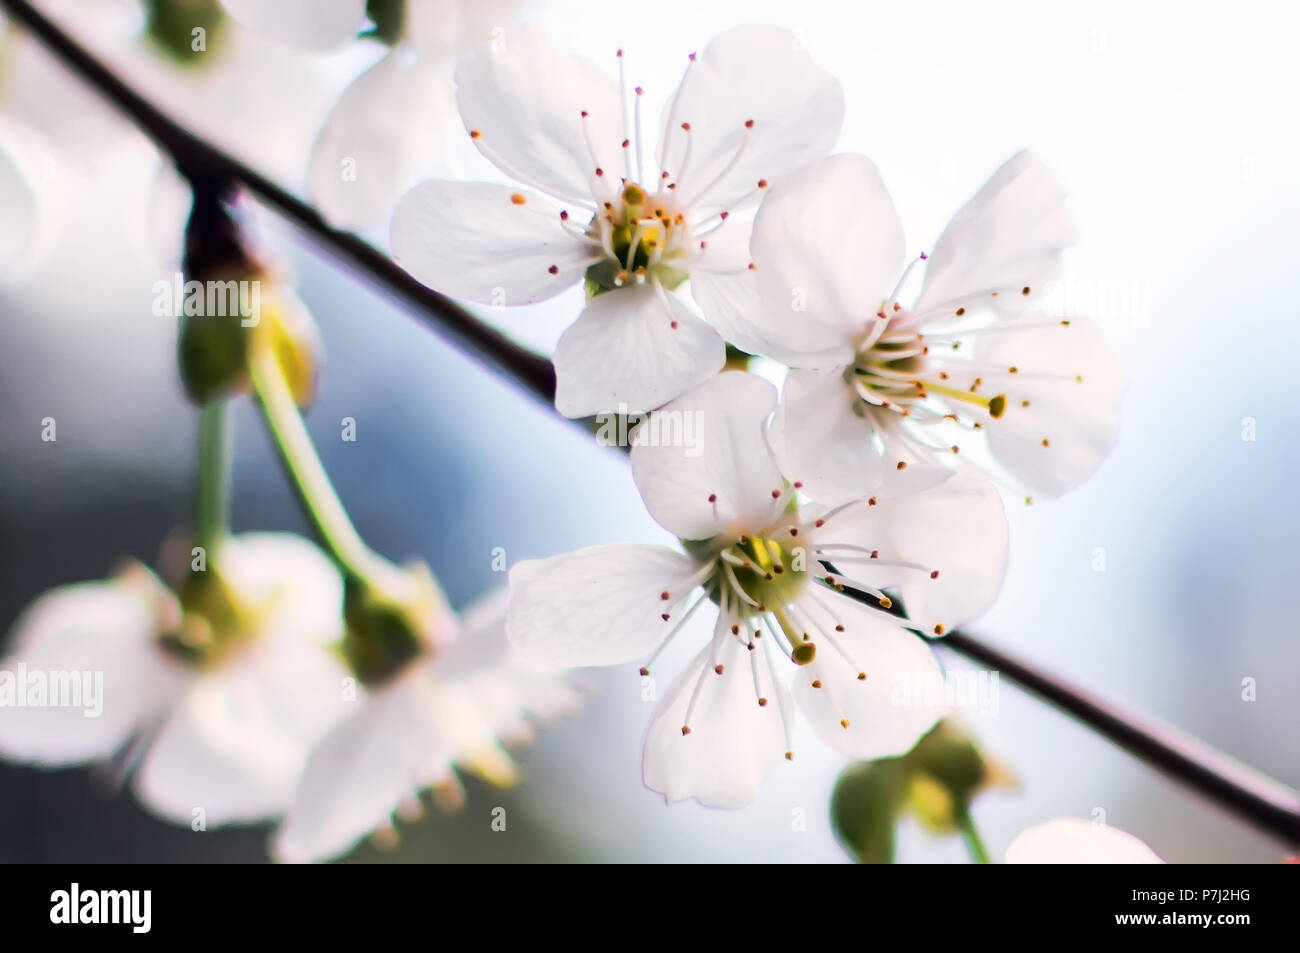 White Cherry flowers or Prunus cerasus flowers, cherry tree blossom. Closeup photo of white cherry flowers, soft focus. Stock Photo